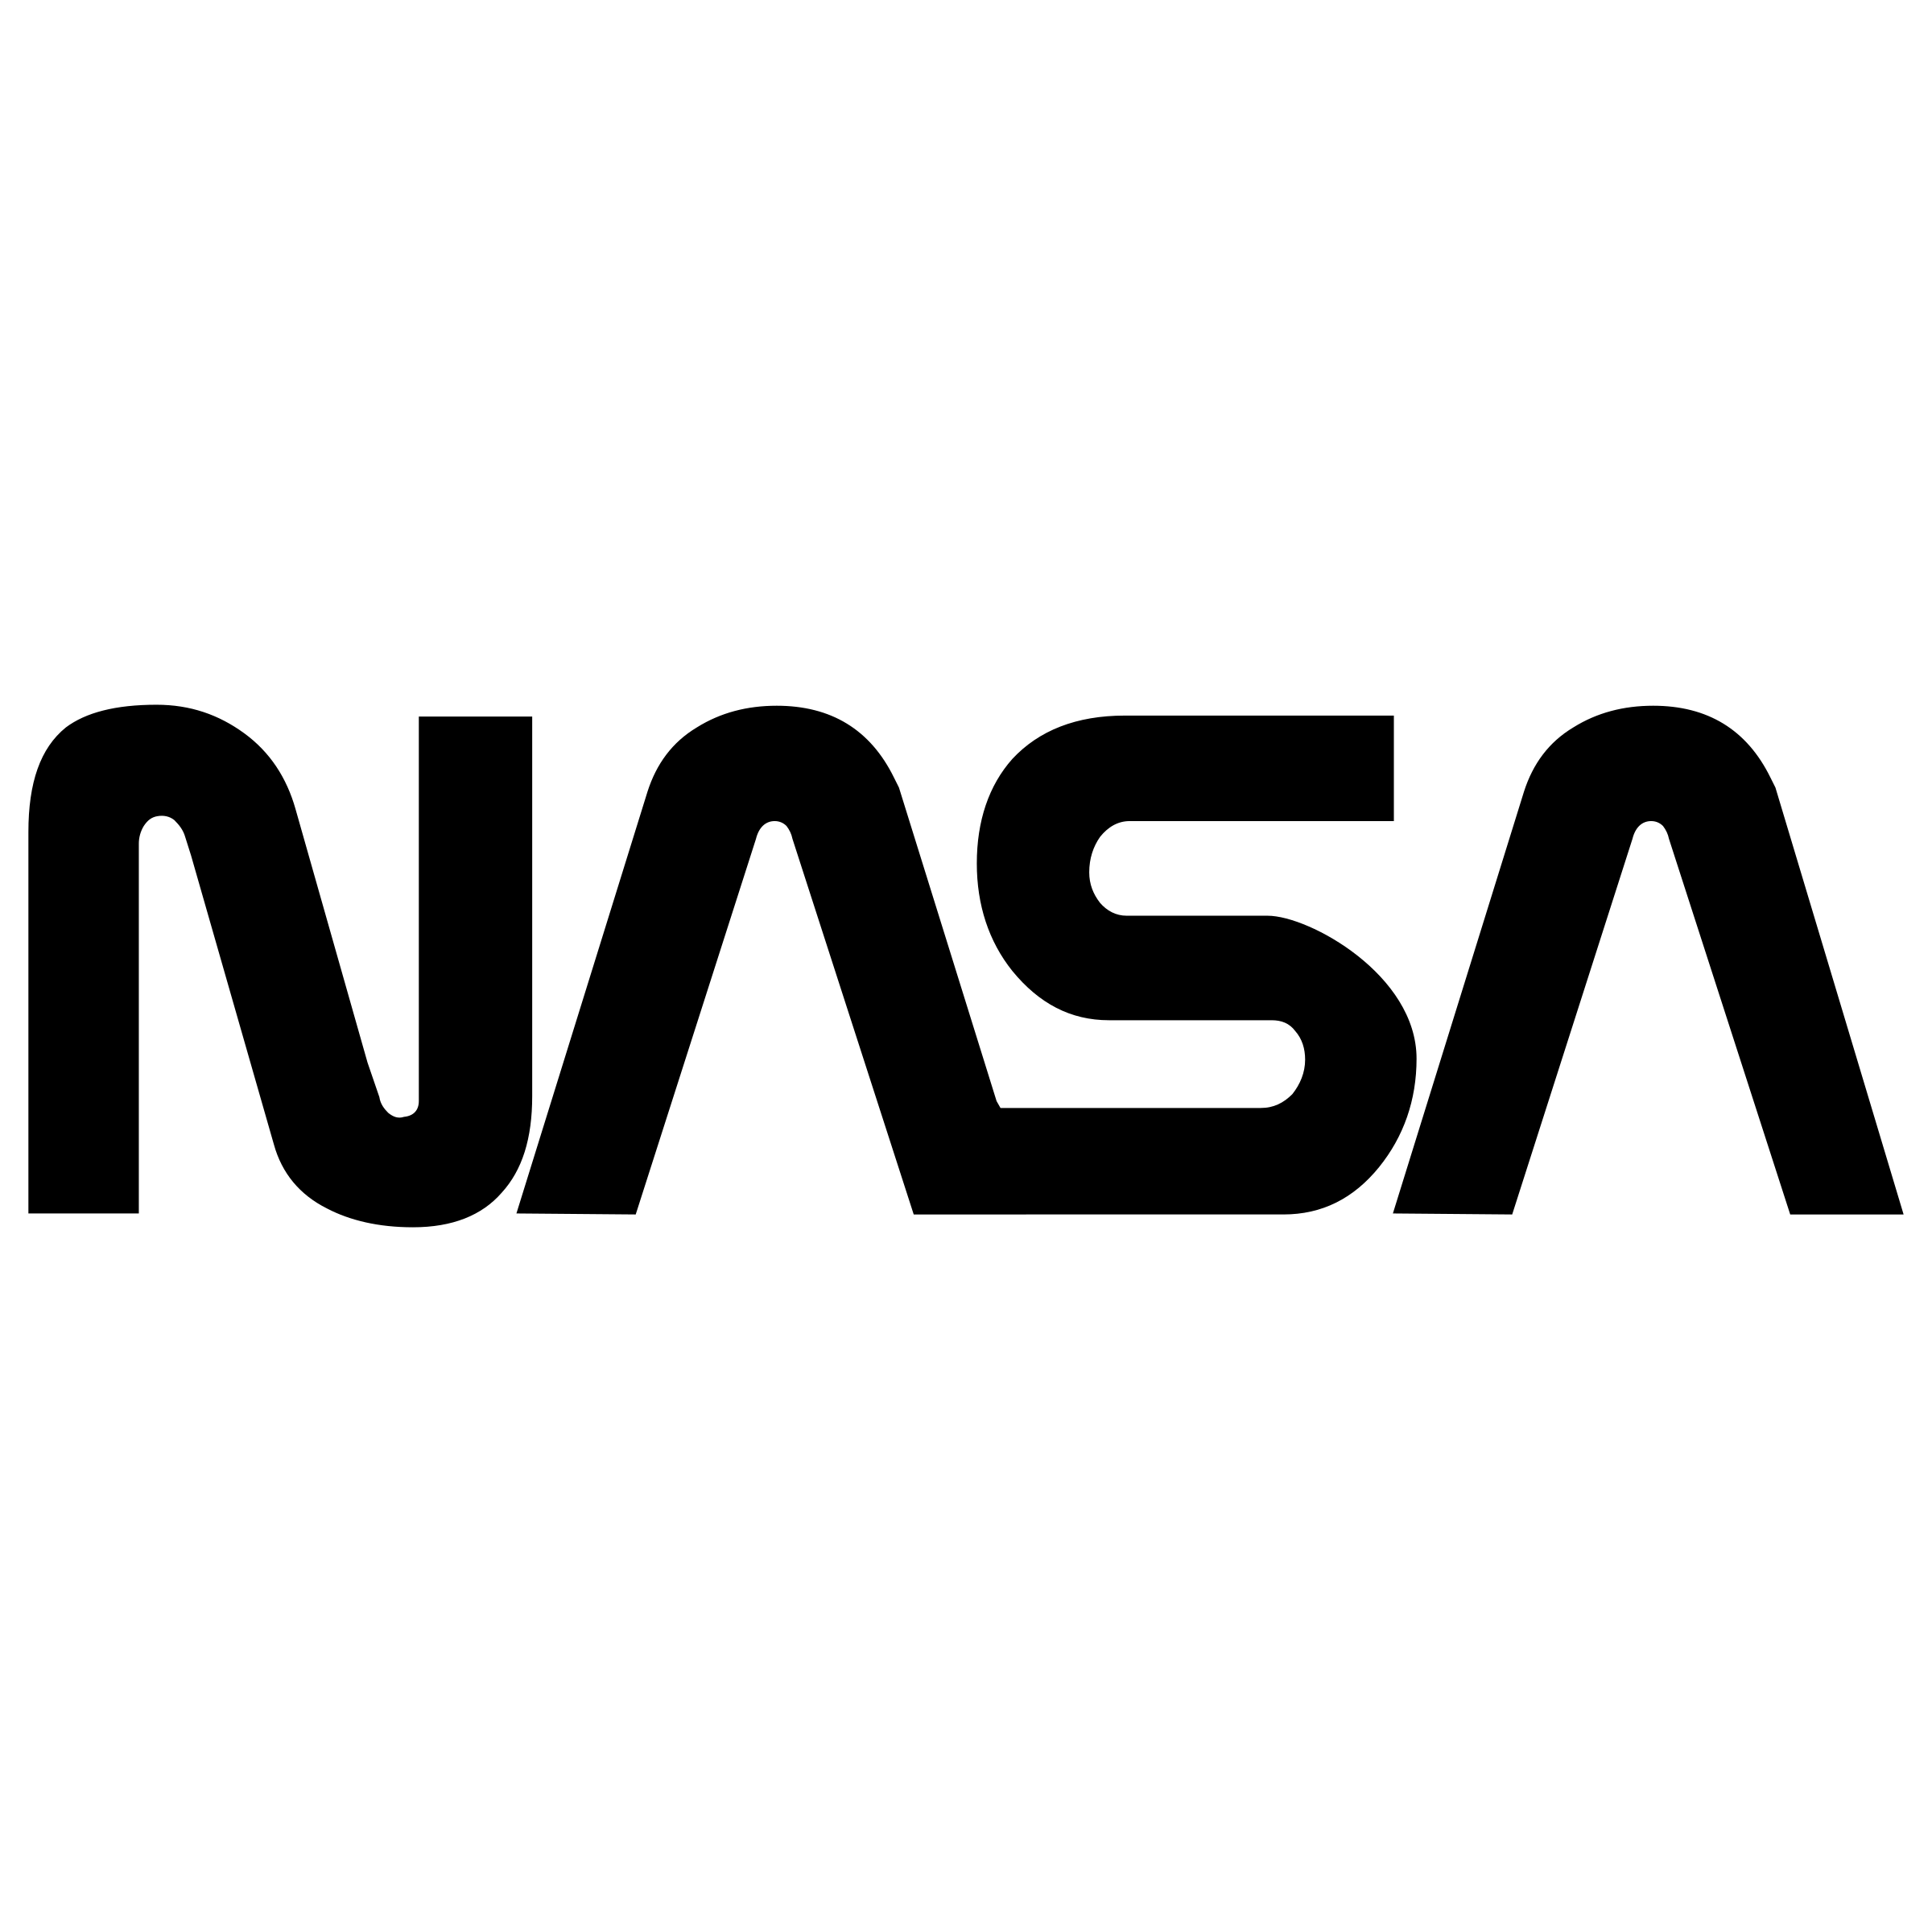 Black NASA Logo - NASA Logo PNG Transparent & SVG Vector - Freebie Supply